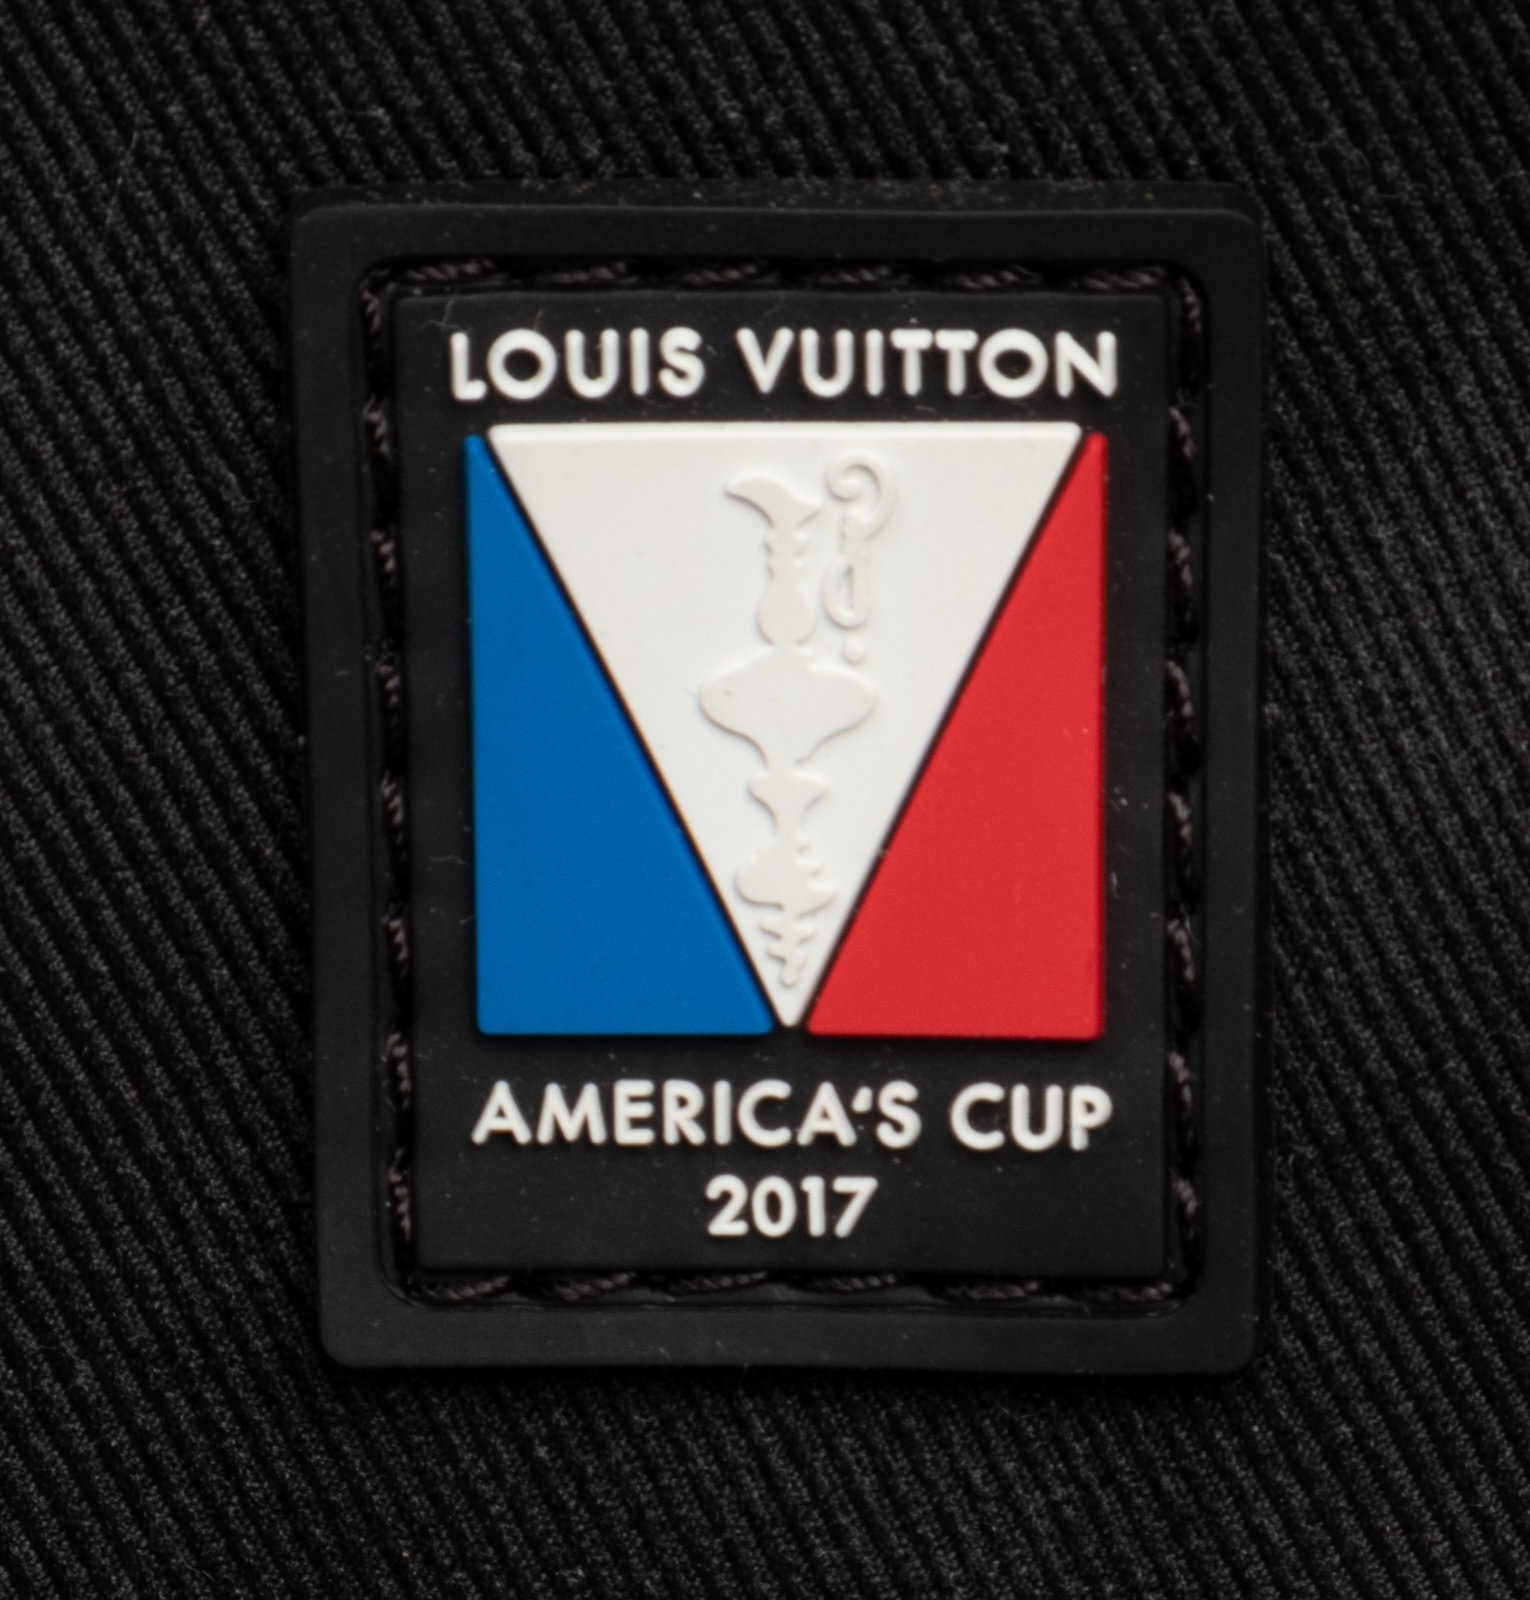 Sold at Auction: Louis Vuitton Americas Cup Bag